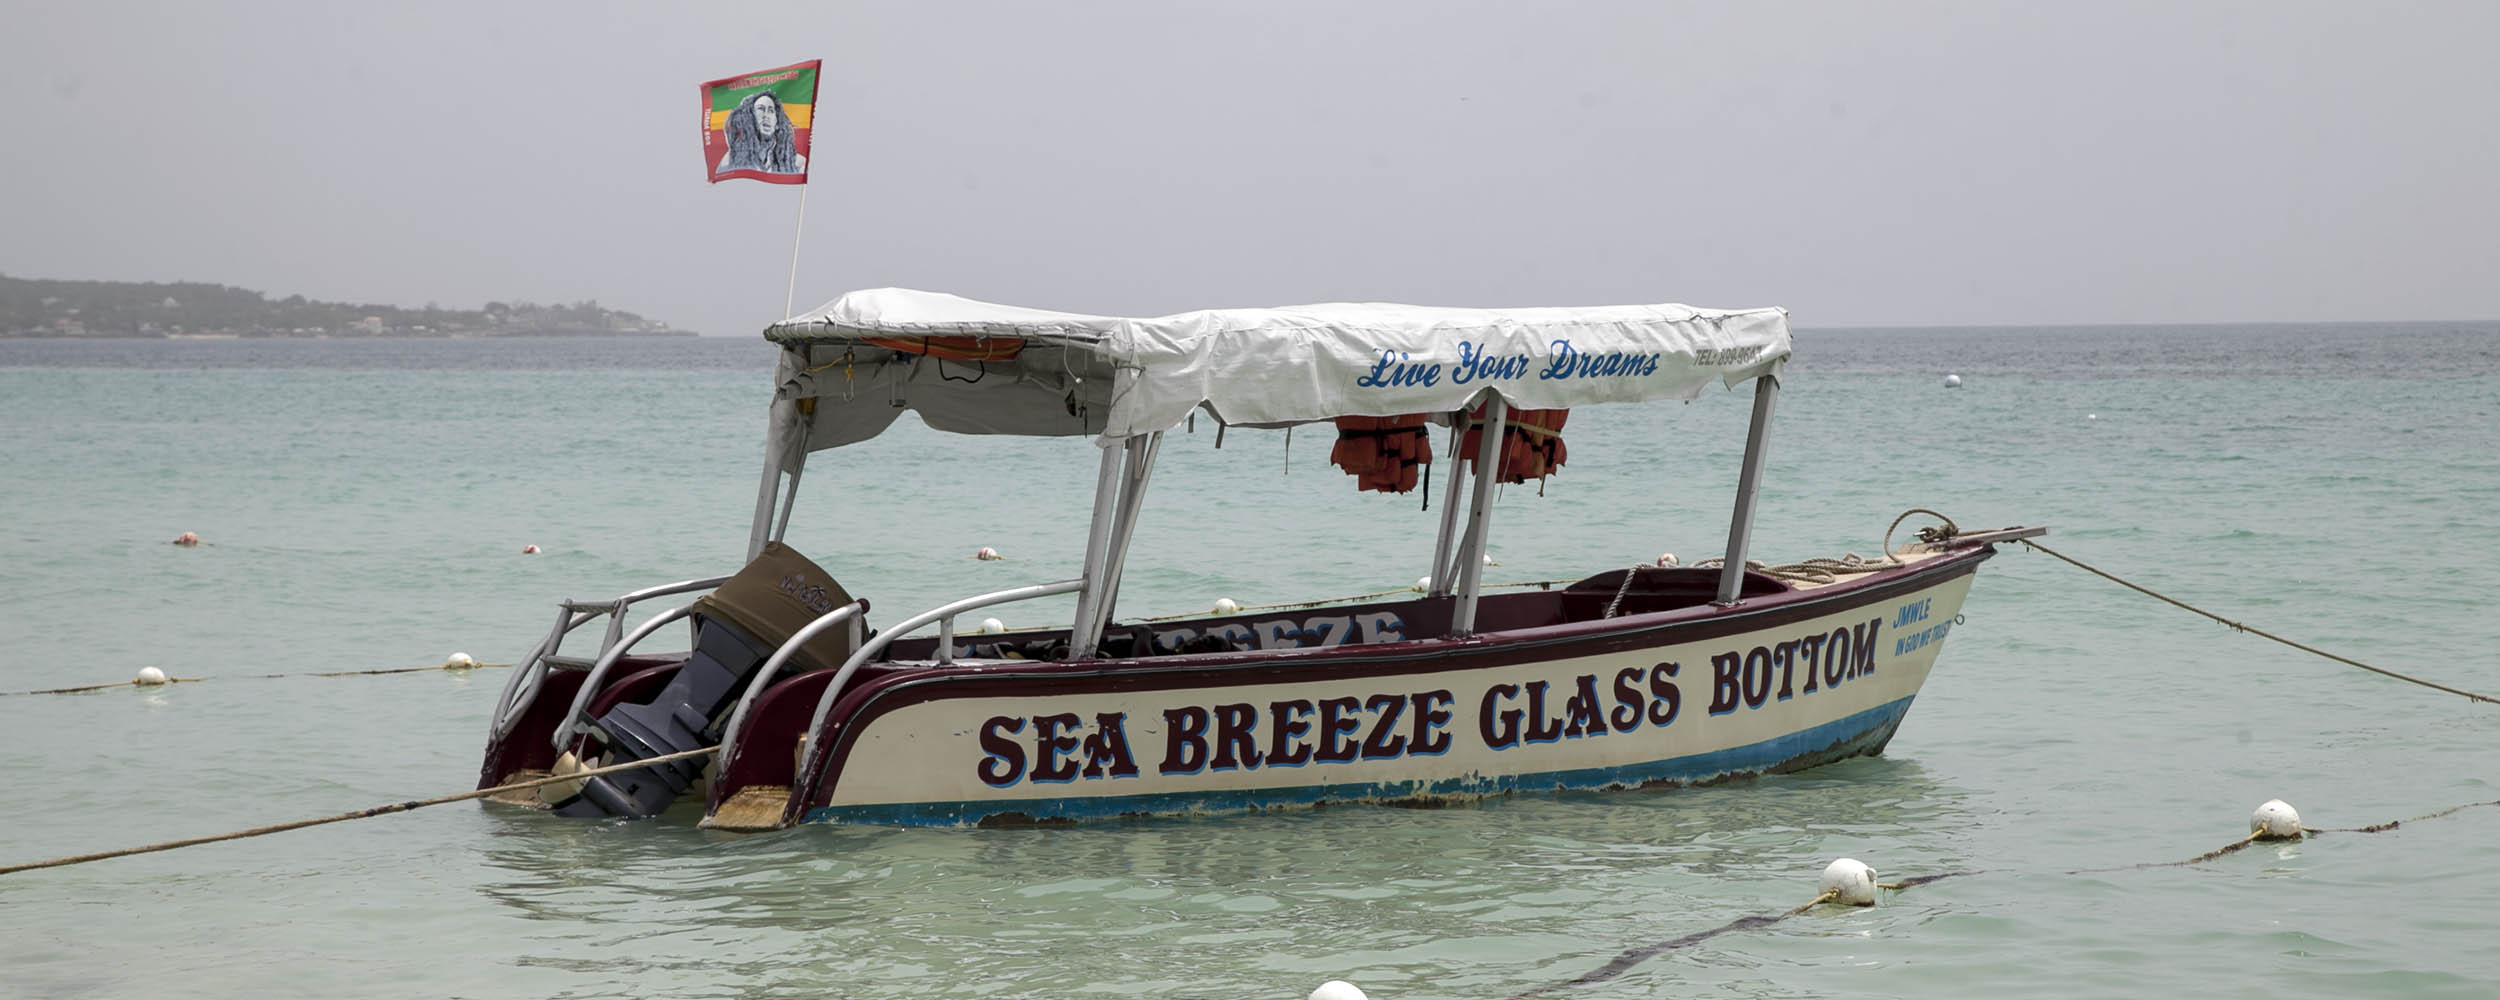 Sea Breeze Glass Bottom Boat - Negril Beach, Negril Jamaica